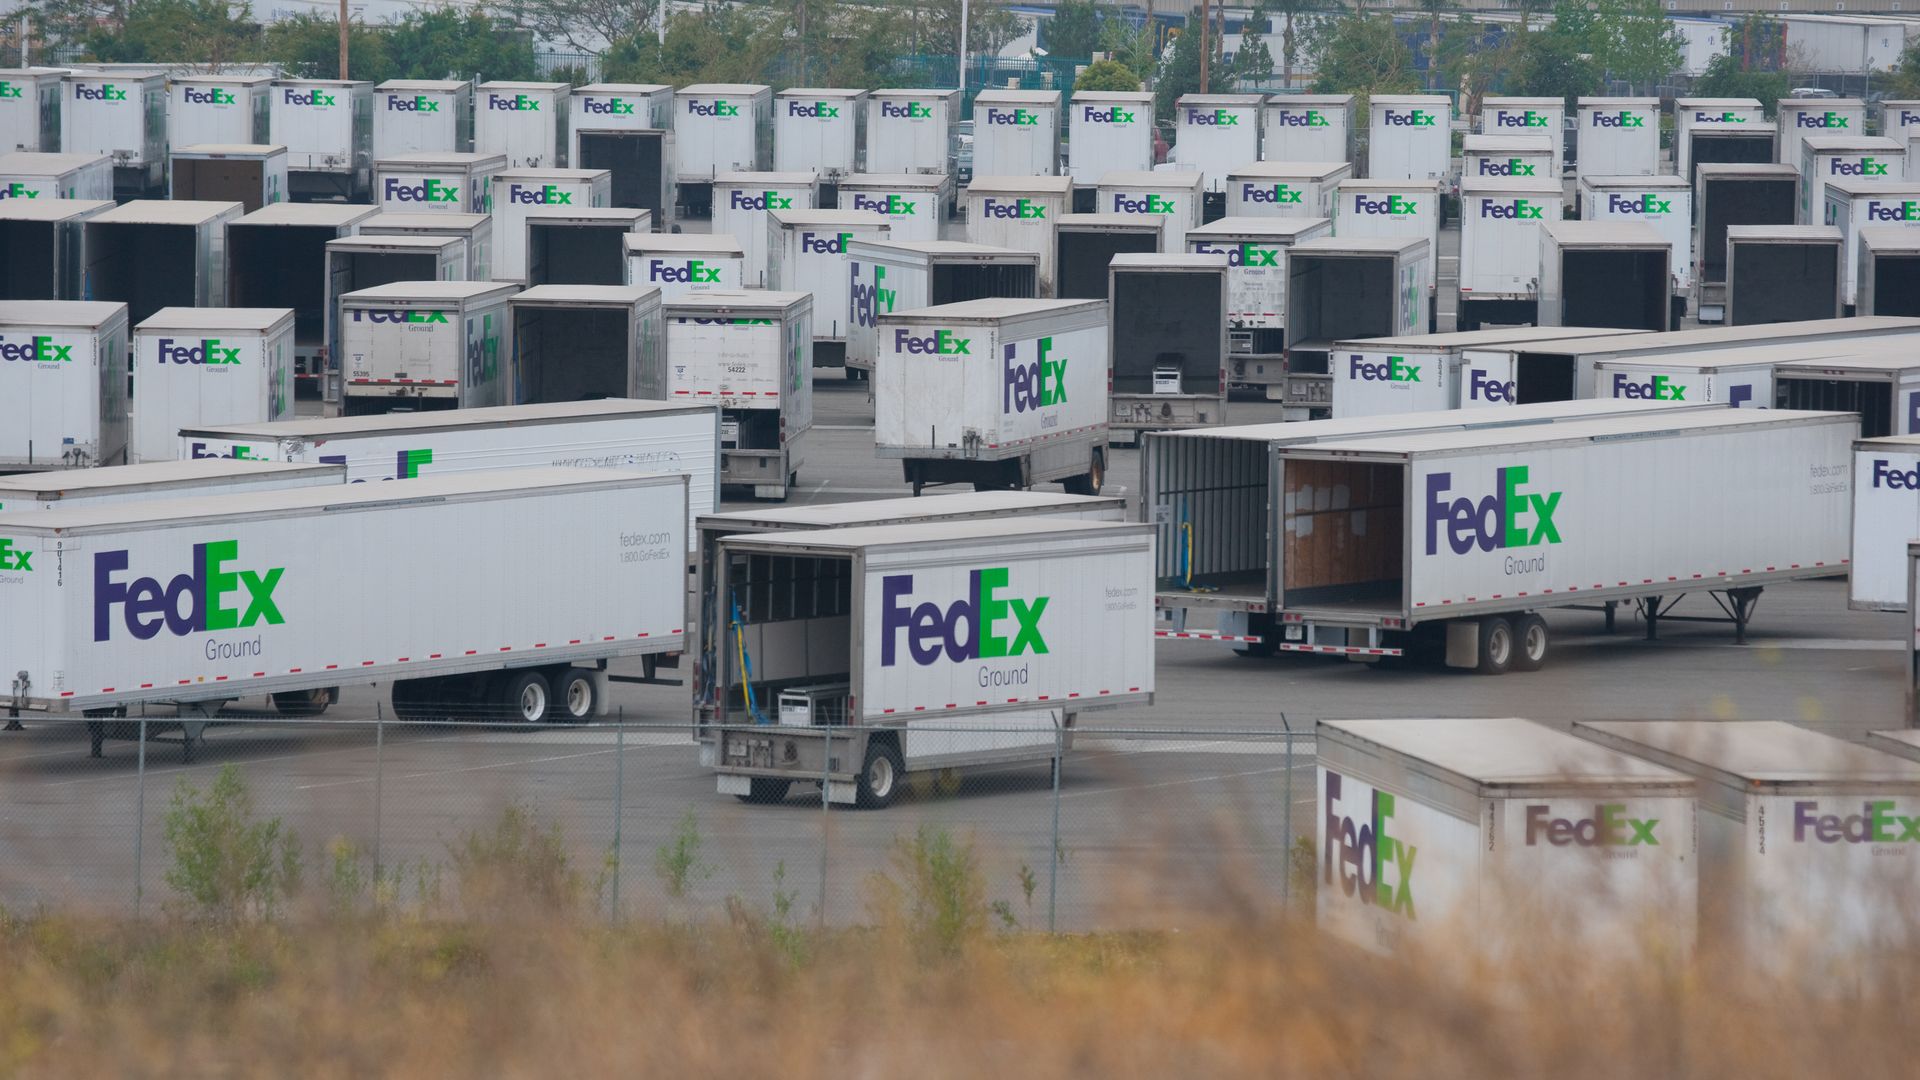 Idle FedEx trucks